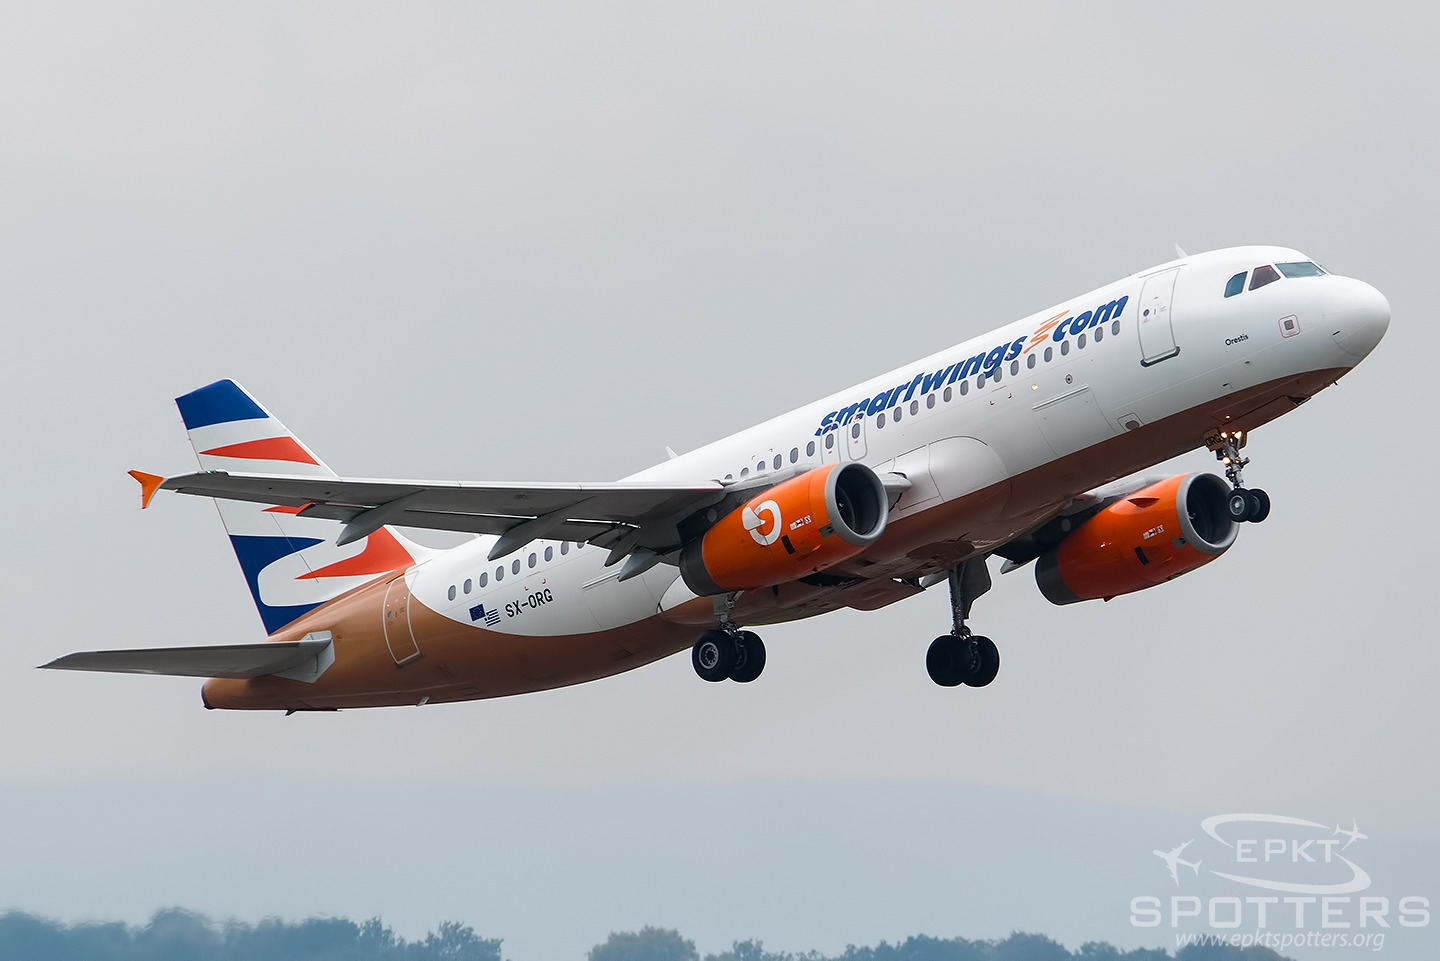 SX-ORG - Airbus A320 -232 (Smart Wings) / Leos Janacek Airport - Ostrava Czech Republic [LKMT/OSR]